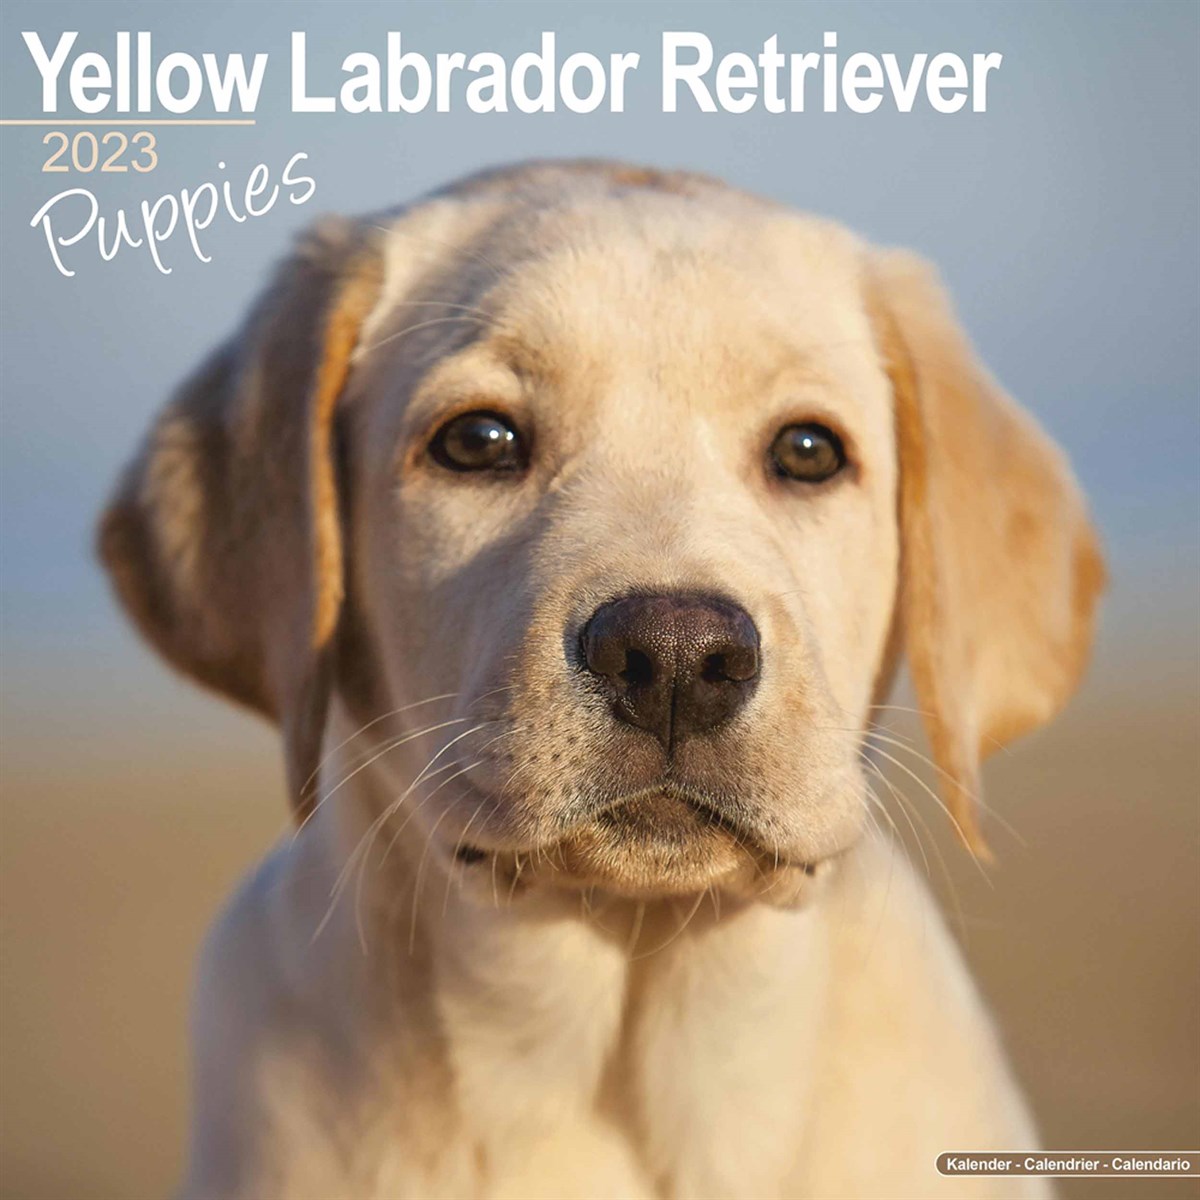 Yellow Labrador Retriever Puppies 2023 Calendars